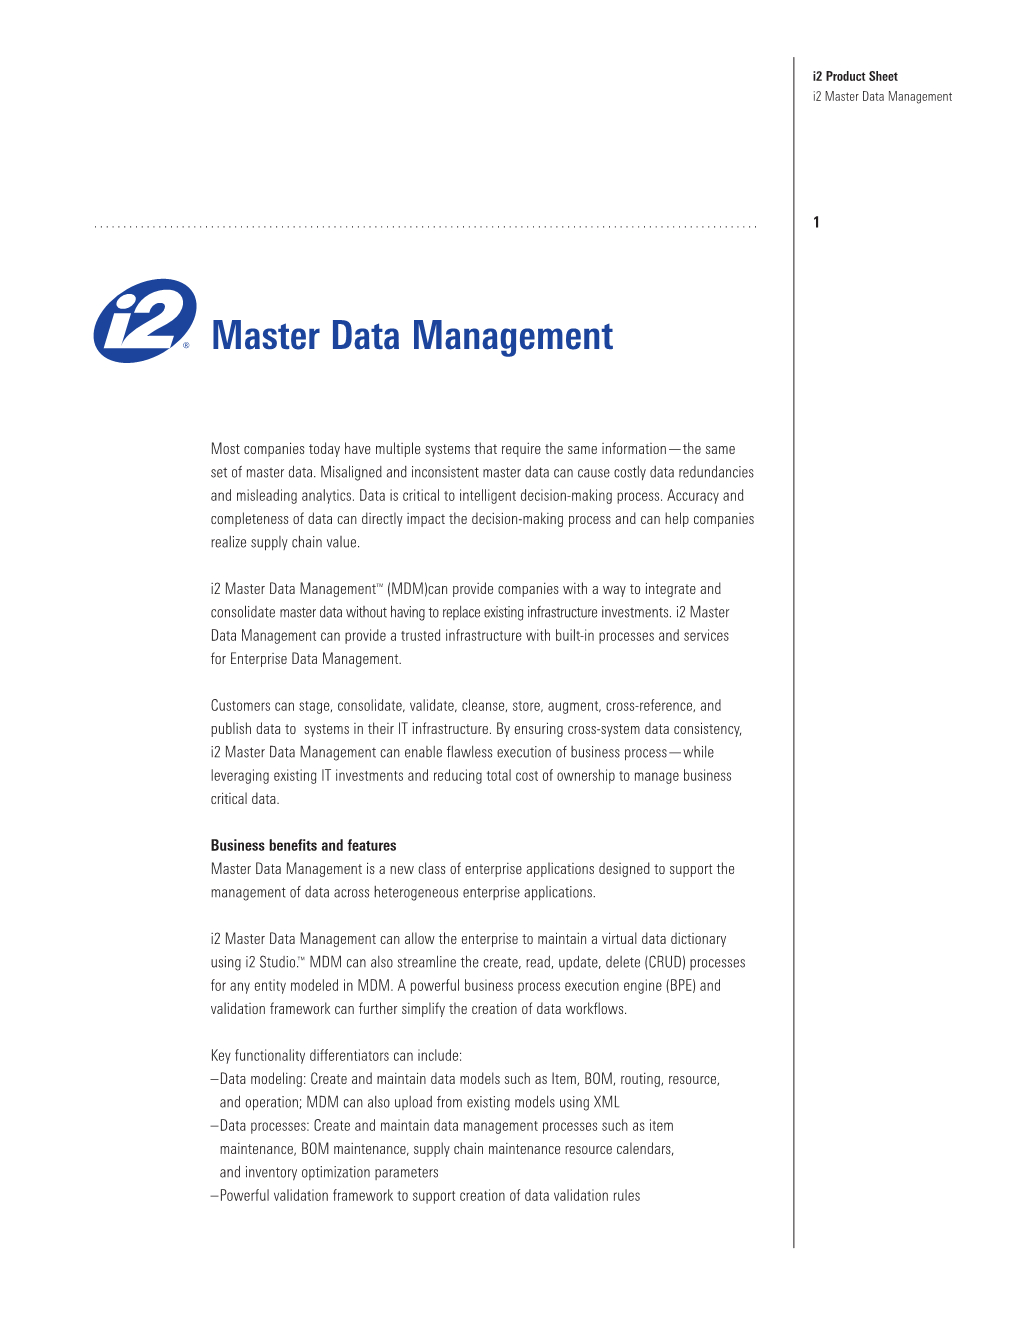 I2 Master Data Management